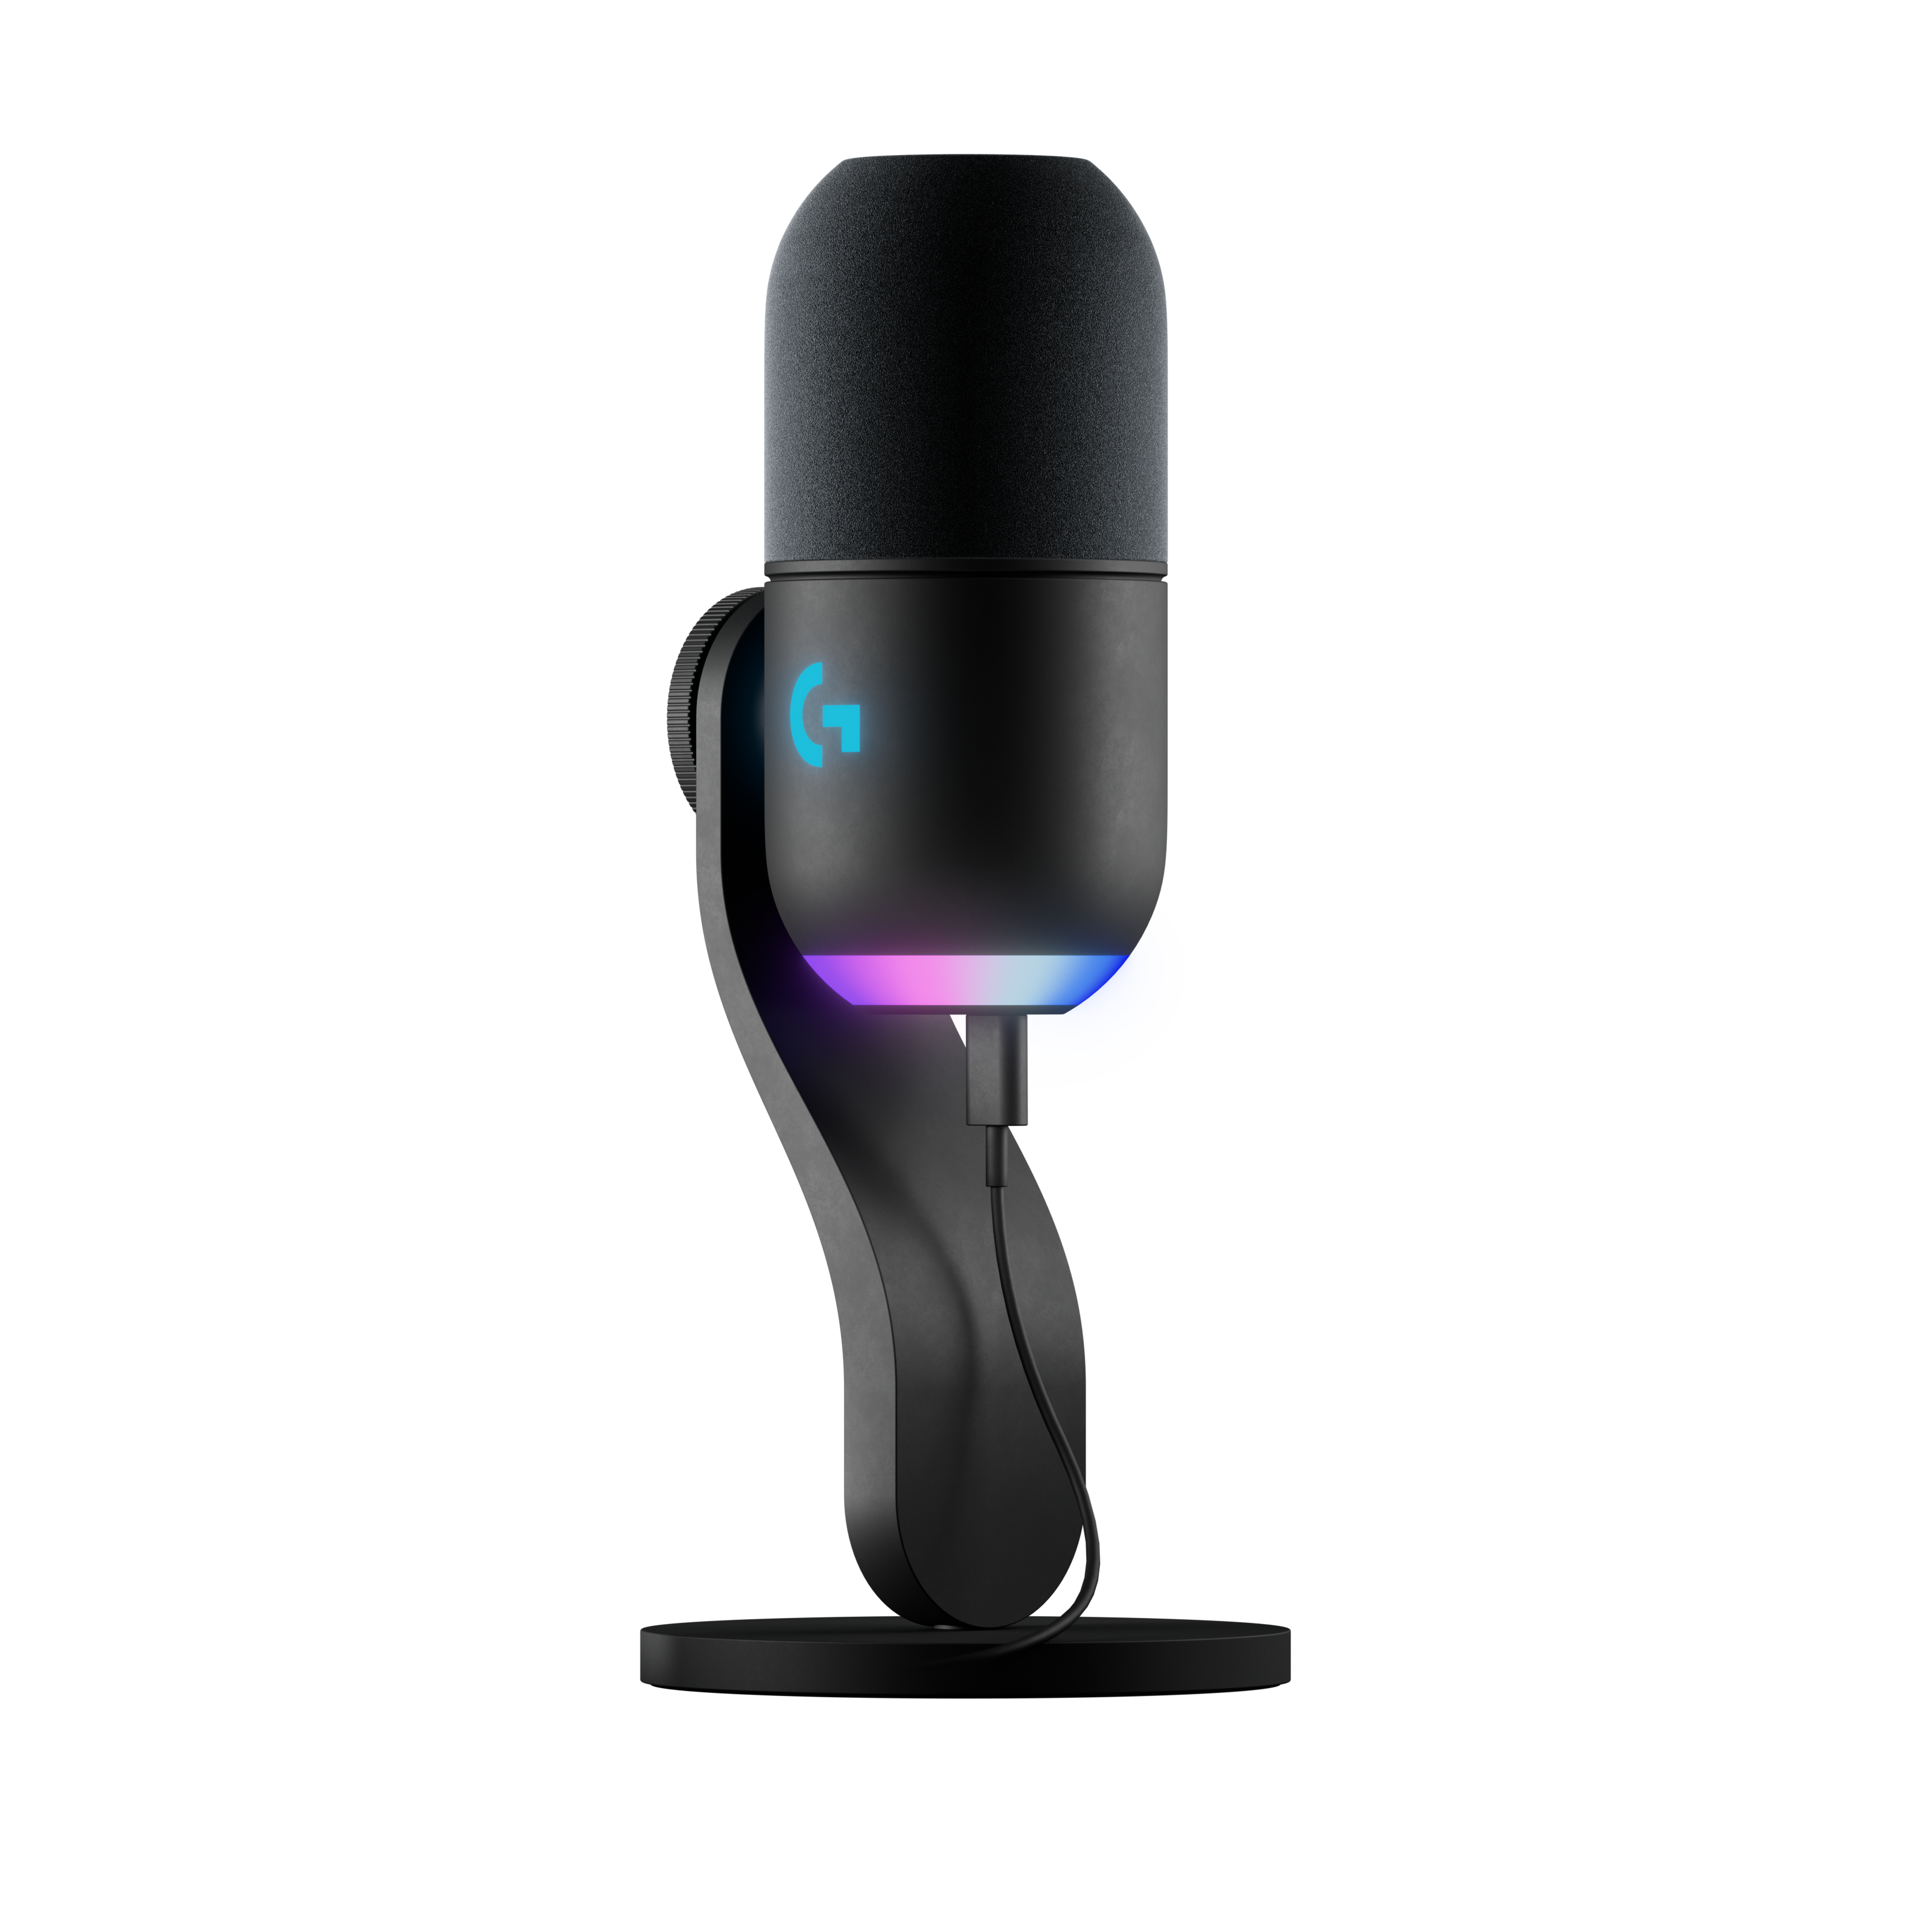 Yeti GX Dynamic RGB Gaming Microphone with LIGHTSYNC